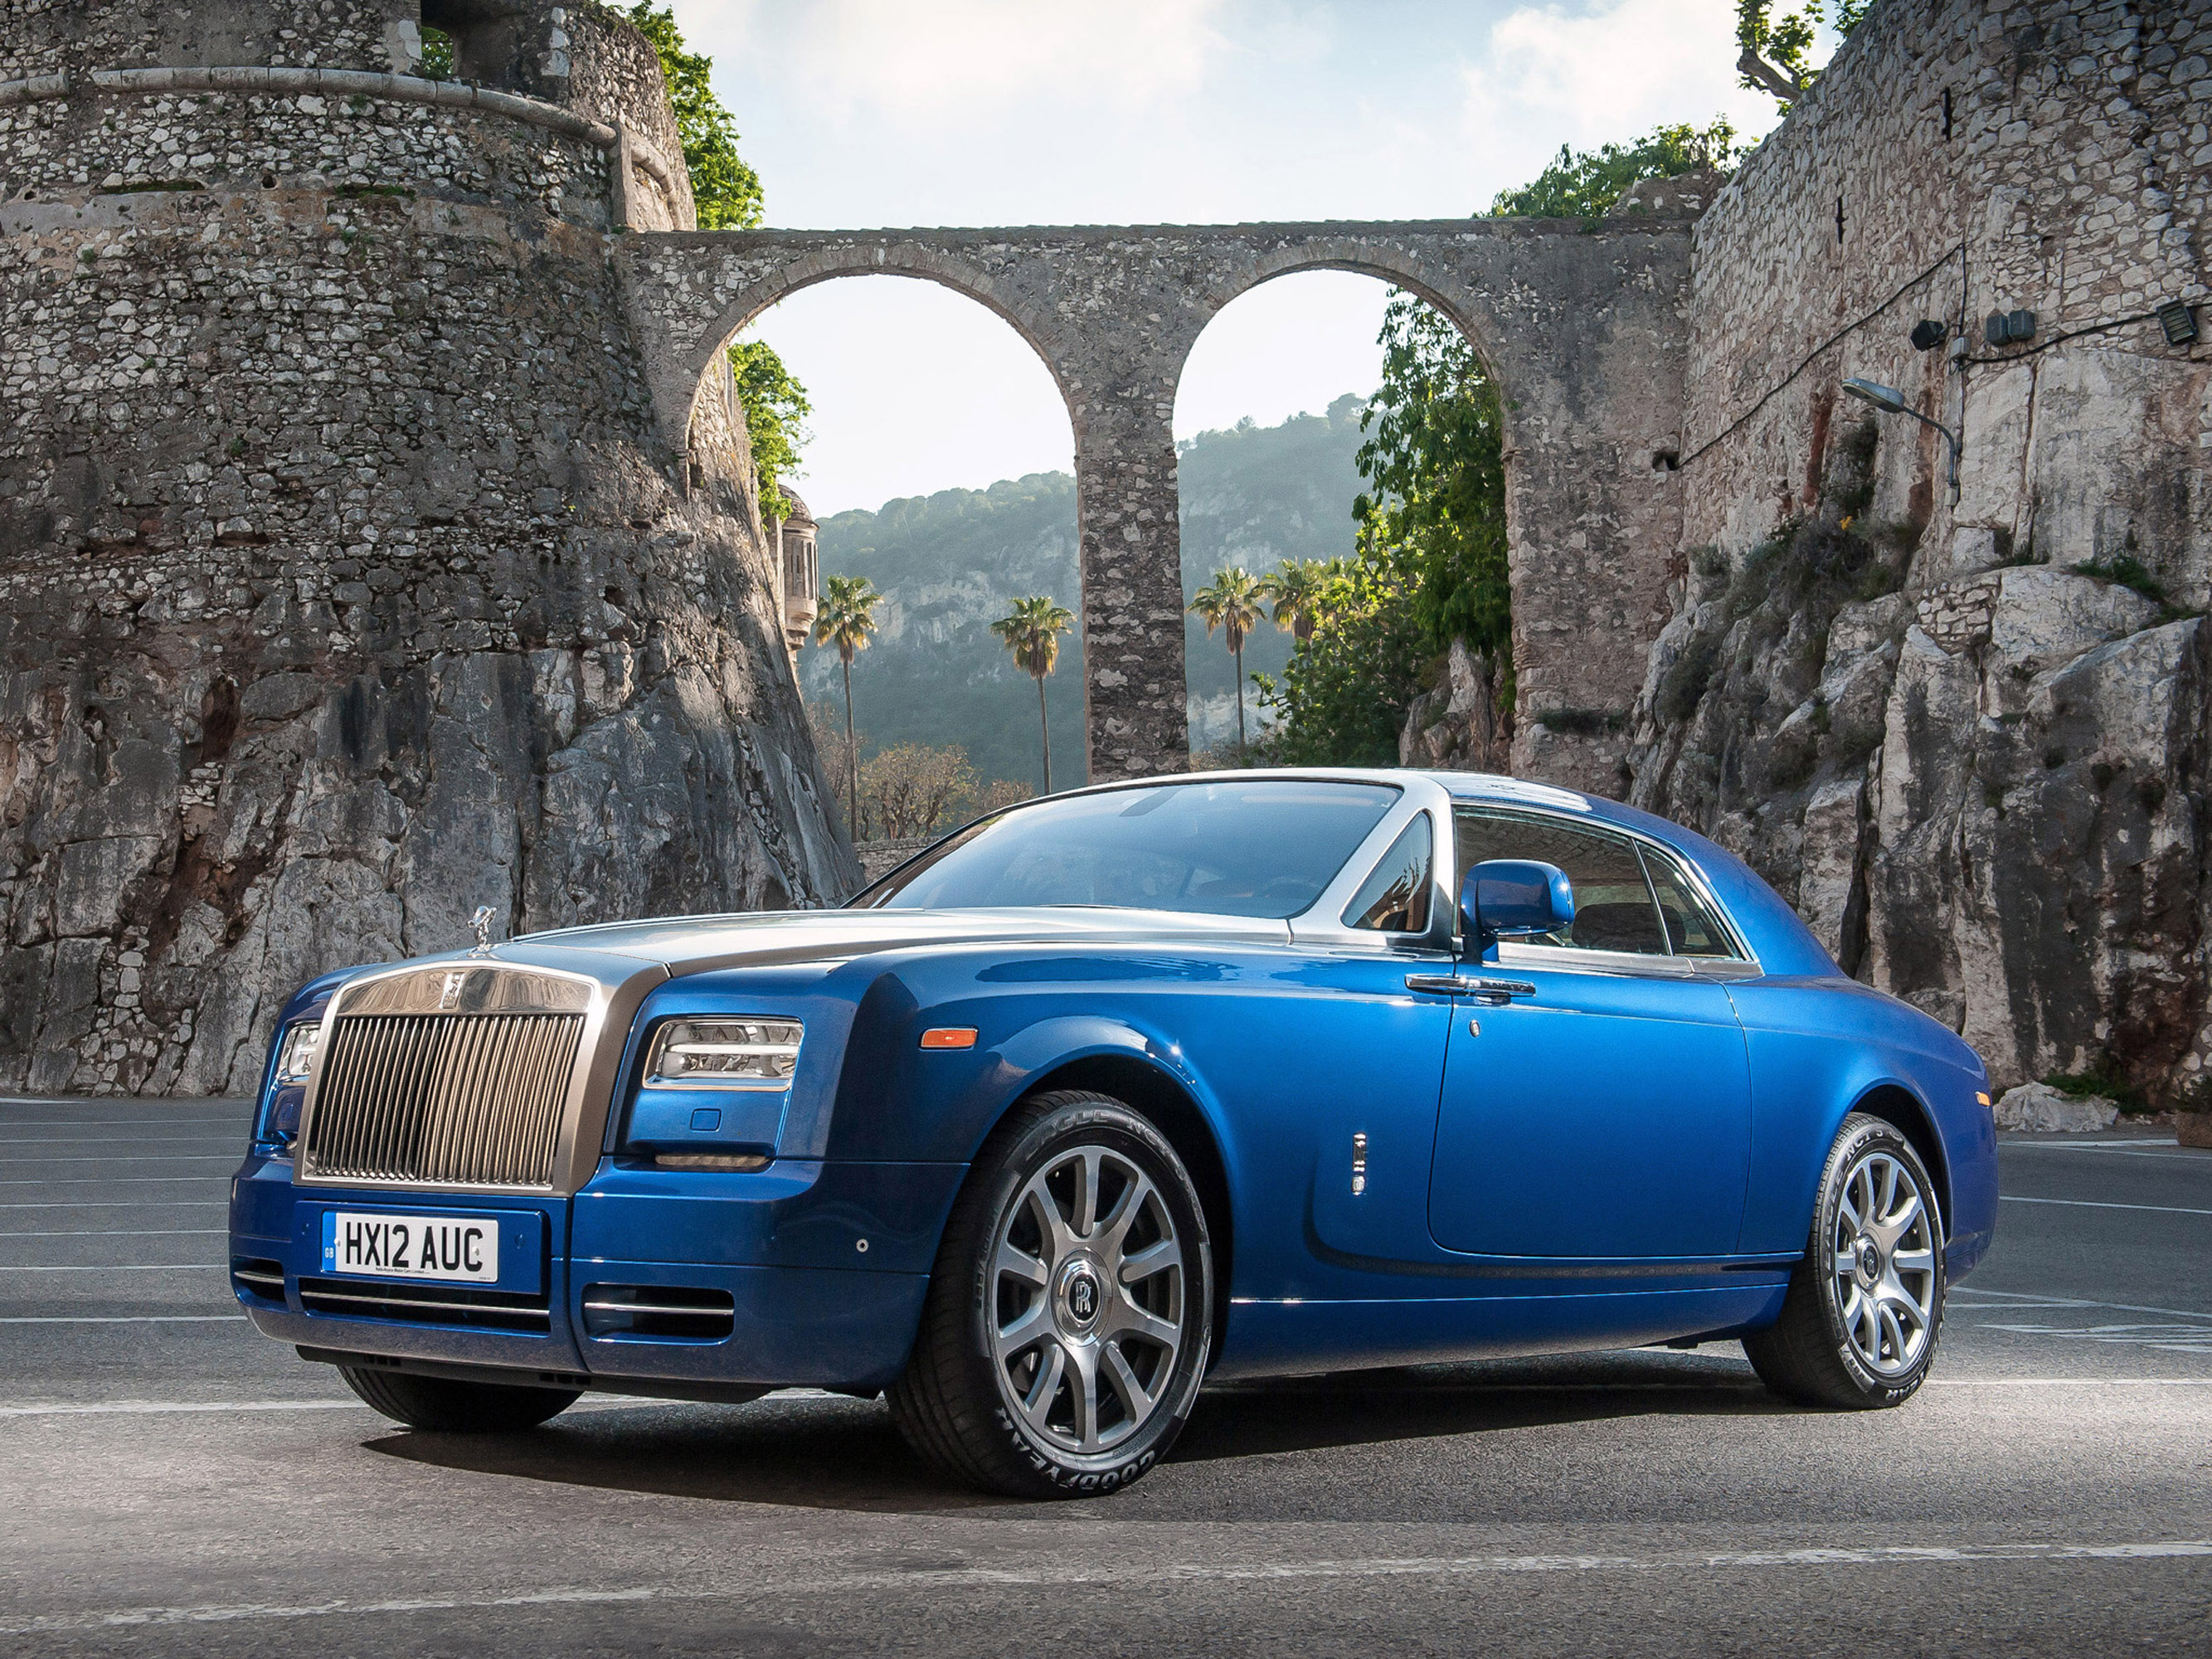 1 rolls royce. Машина Rolls Royce Phantom. Роллс Ройс купе. Rolls Royce Phantom Coupe 2012. Rolls Royce Phantom купе.